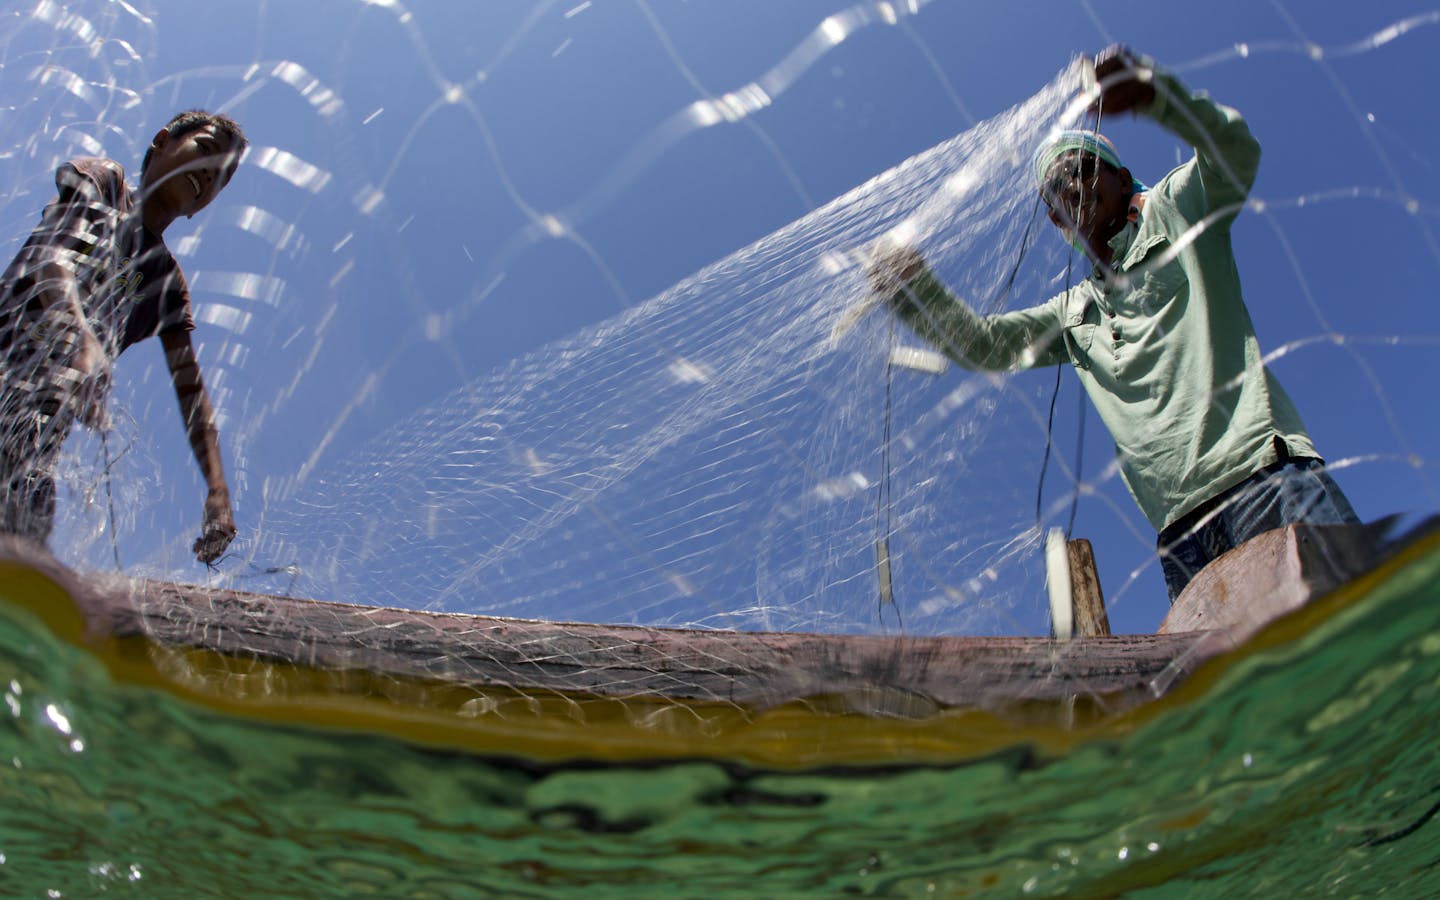 Fisherman cast a net to catch fish 